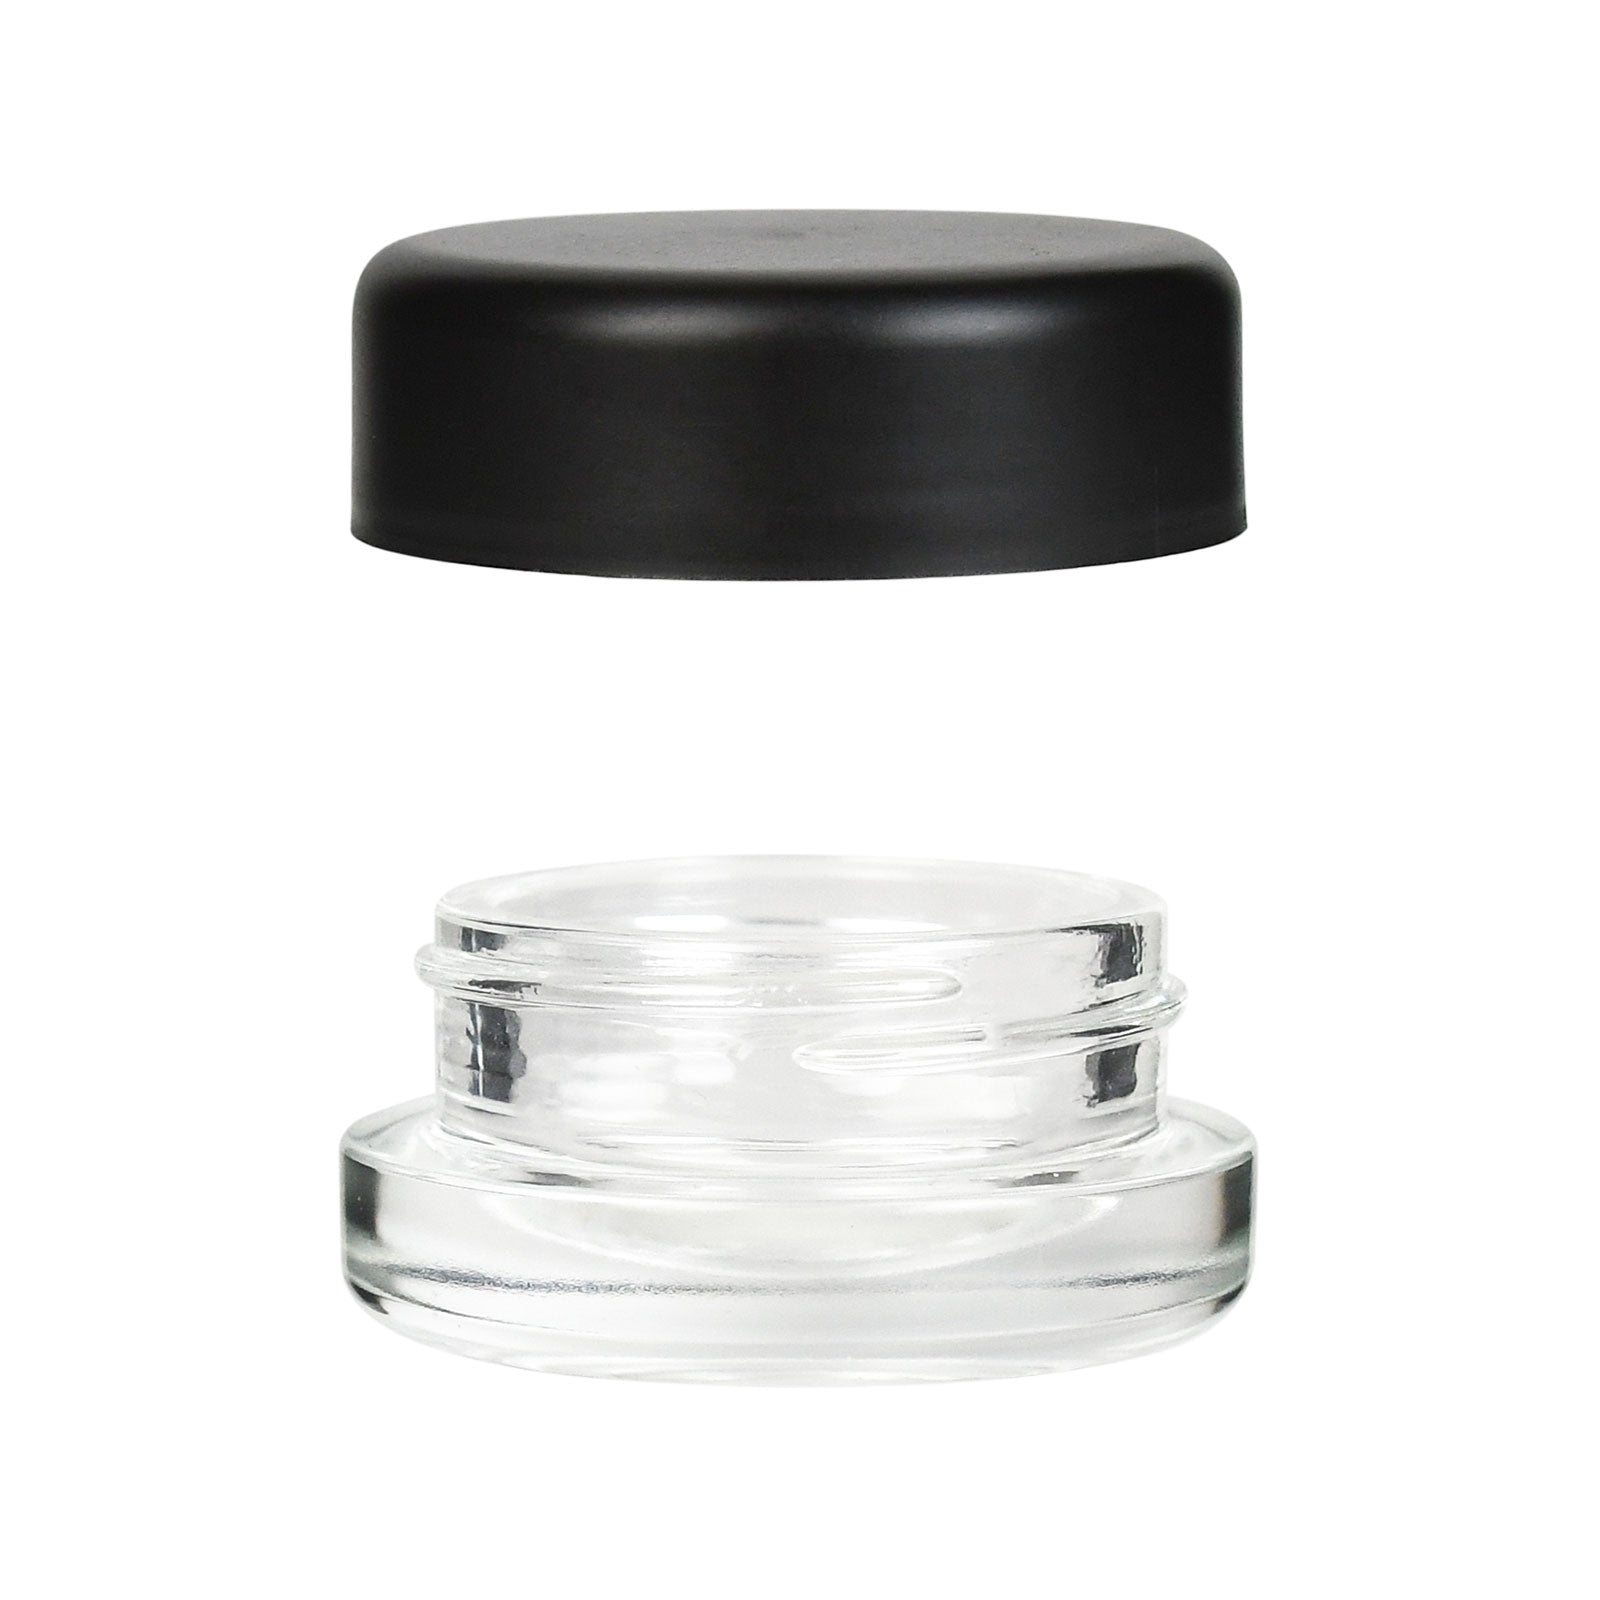 9ml Child Resistant Glass Jar With Black Cap - 2 Gram - 320 Count